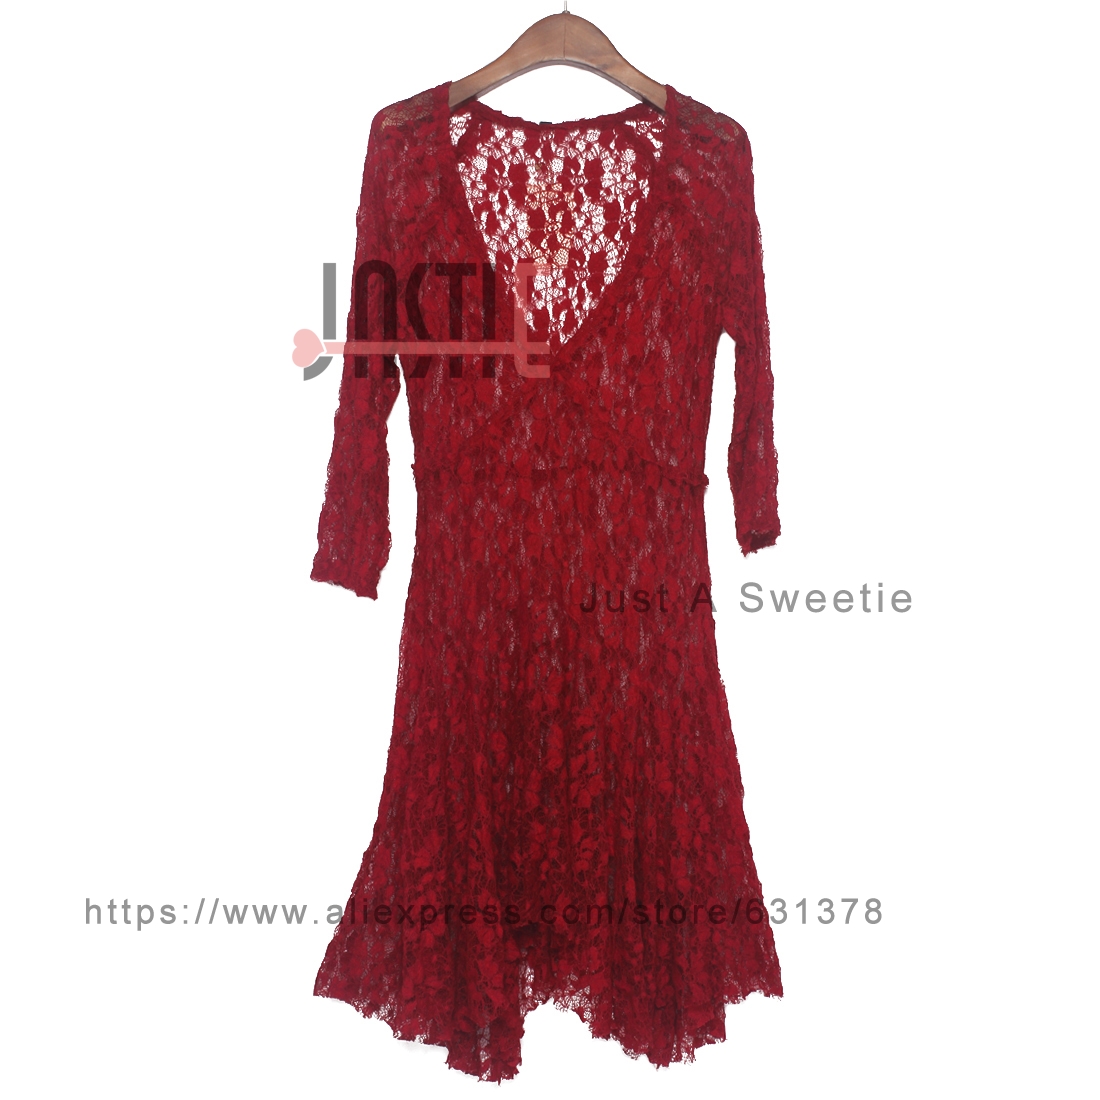 Jastie-Summer-Style-Boho-Romantic-Sheer-Floral-Lace-Dress-V-Neck-Intimately-Flowy-Women-Dresses-No-L-32349511792